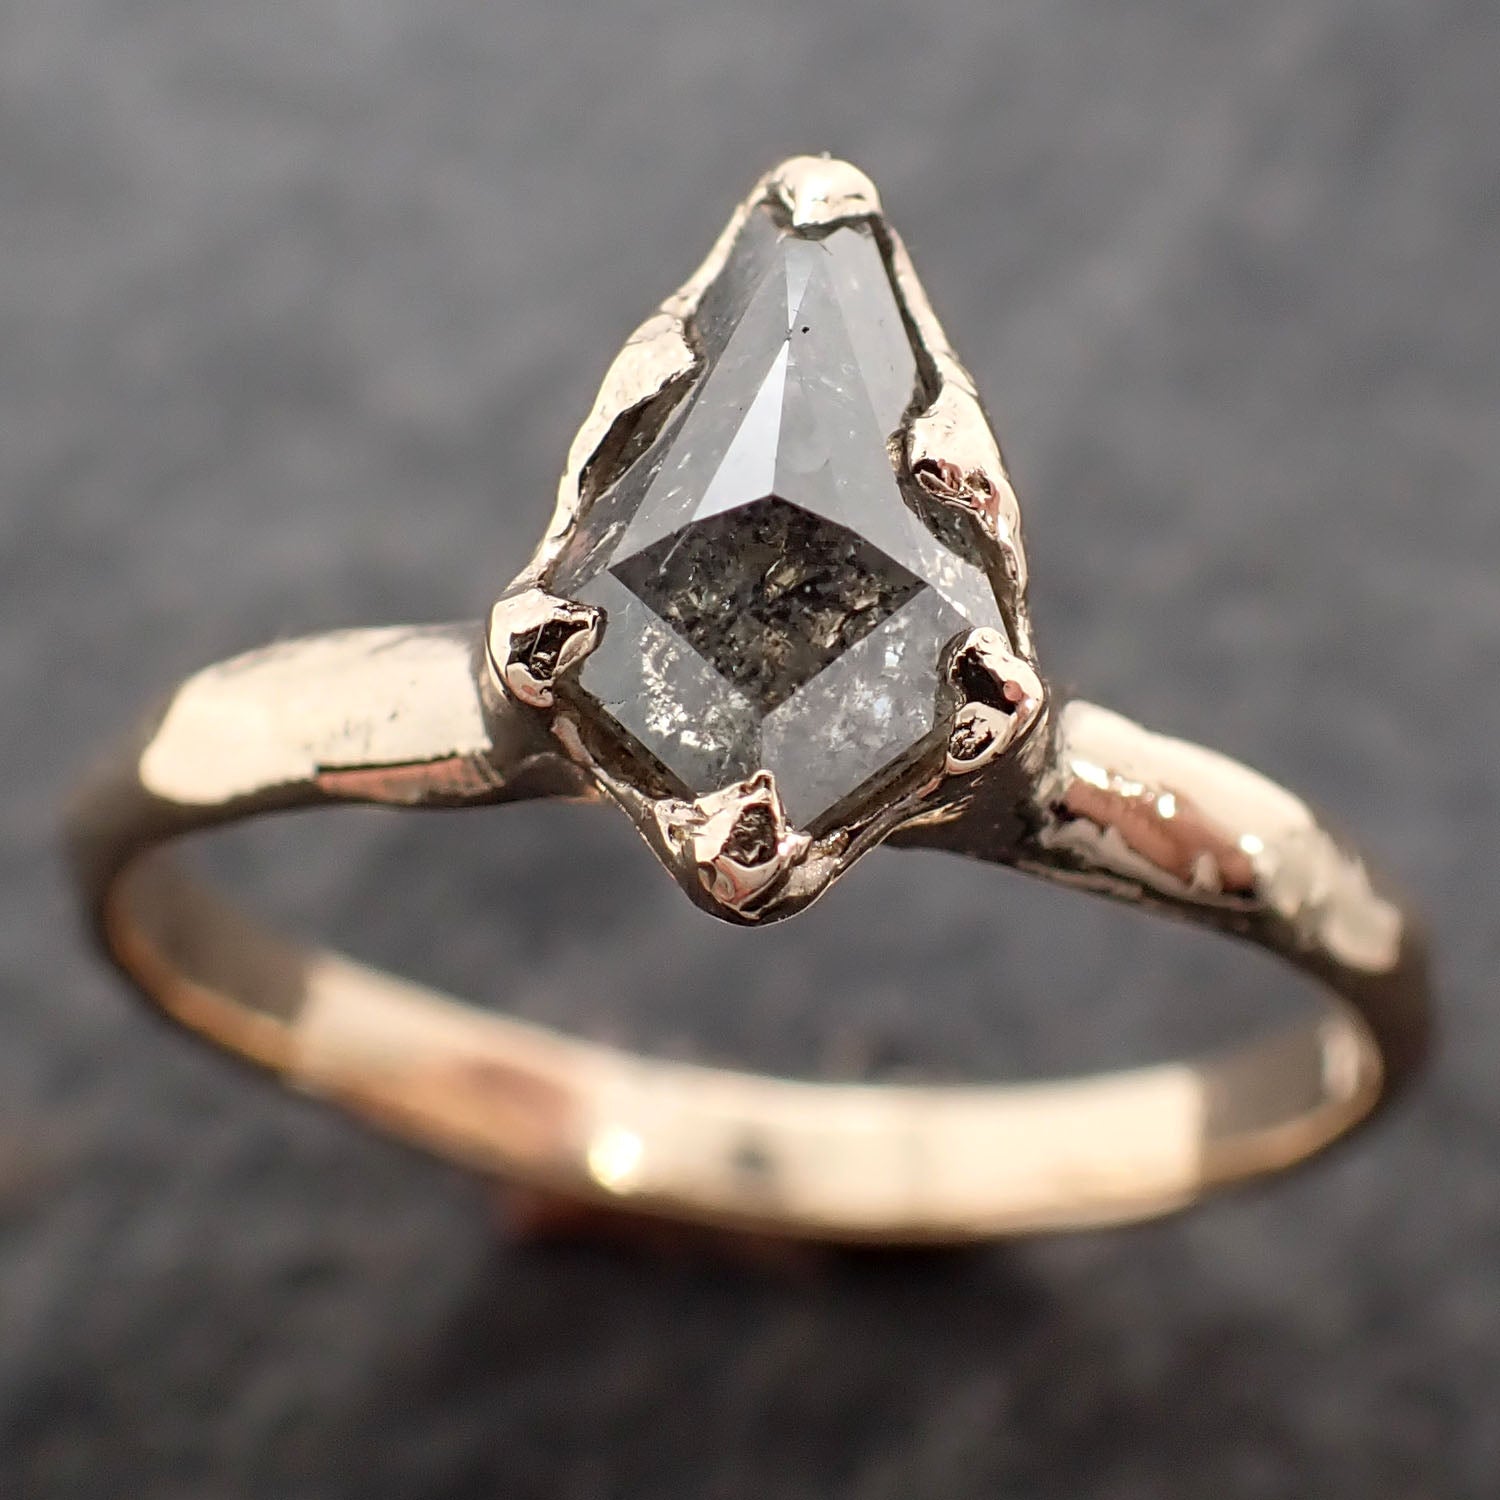 Fancy cut salt and pepper Diamond Solitaire Engagement 14k yellow Gold Wedding Ring Diamond Ring byAngeline 2767